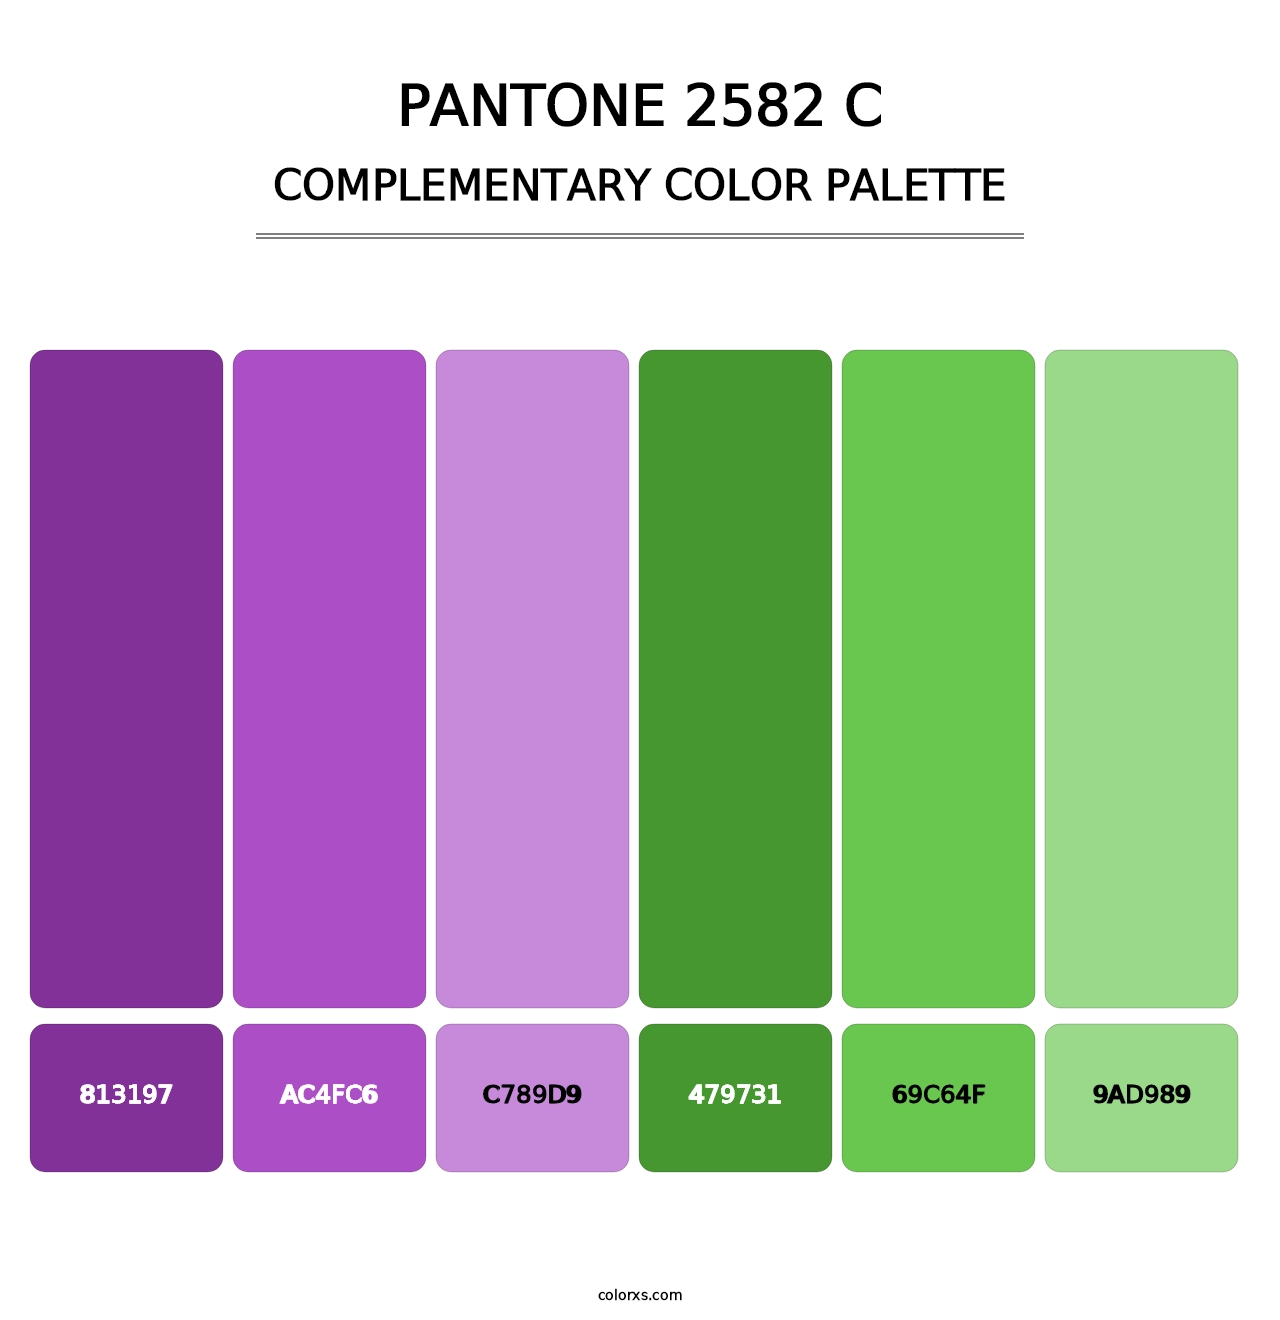 PANTONE 2582 C - Complementary Color Palette